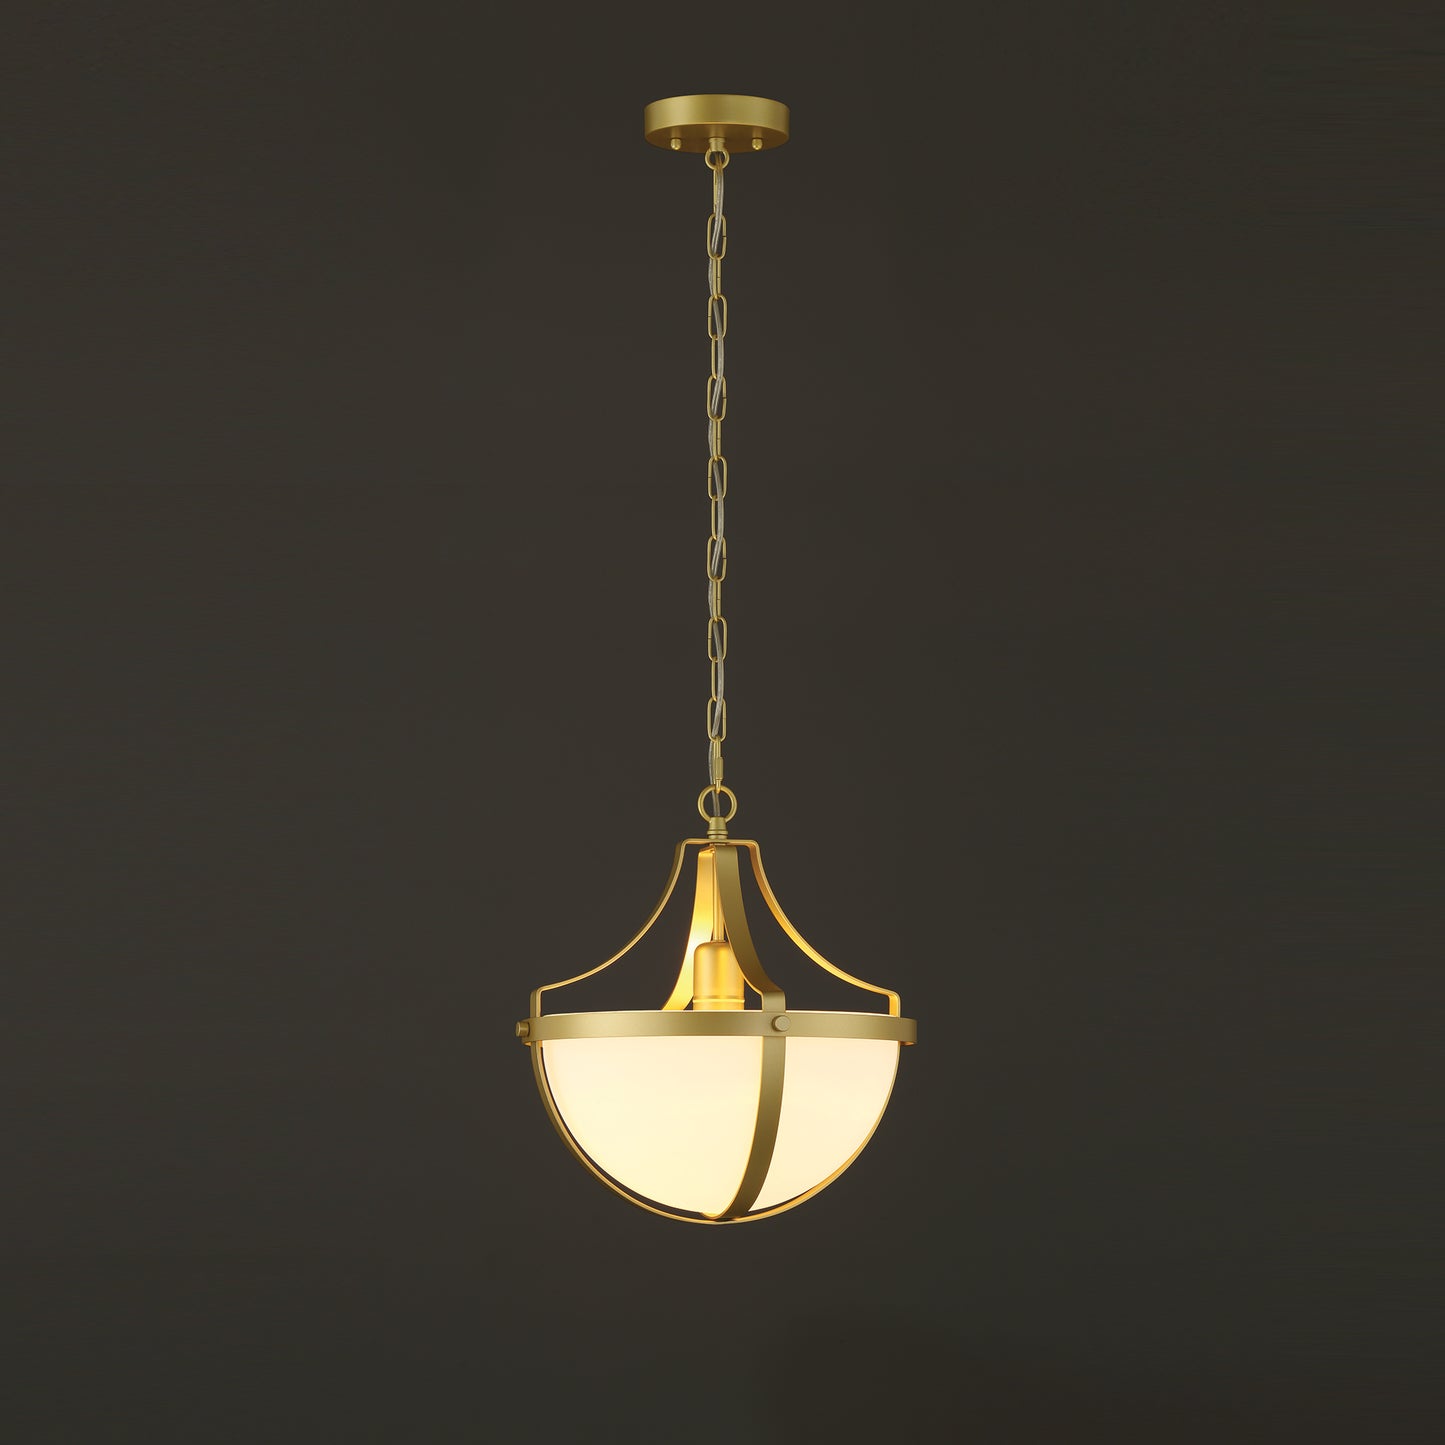 1 light semi gold sphere pendant (7) by ACROMA